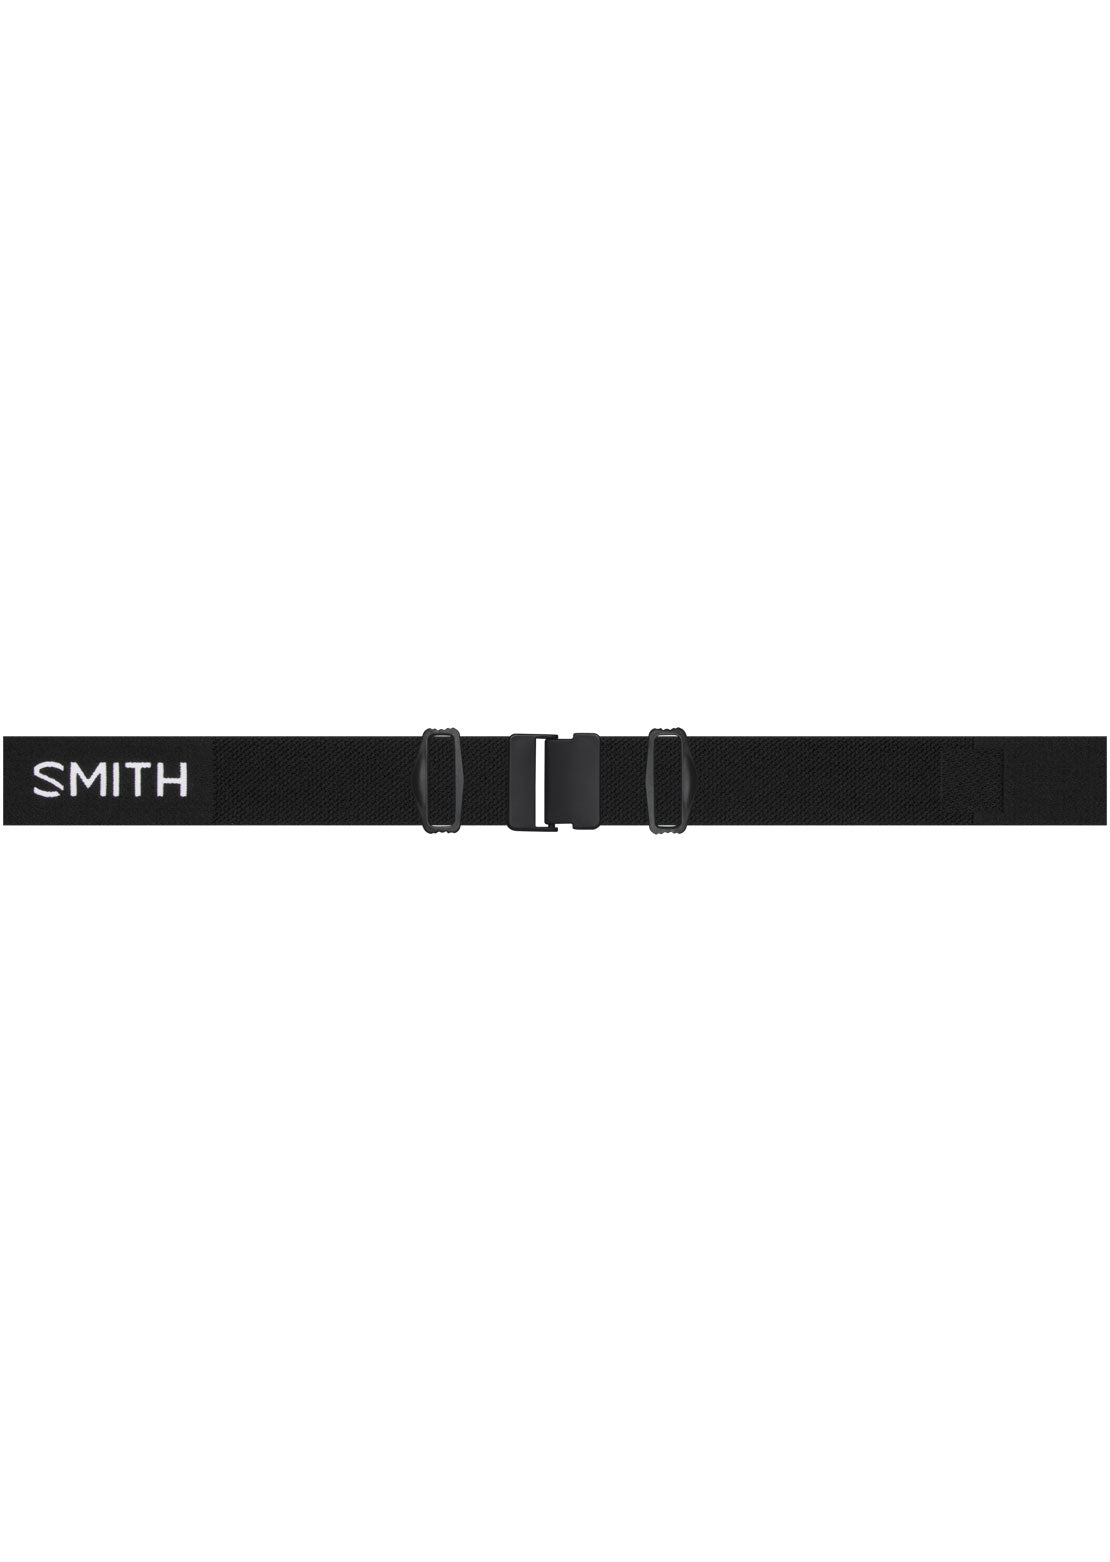 Smith I/O Mag S Goggles Black/ChromaPop Photochromic Rose Flash